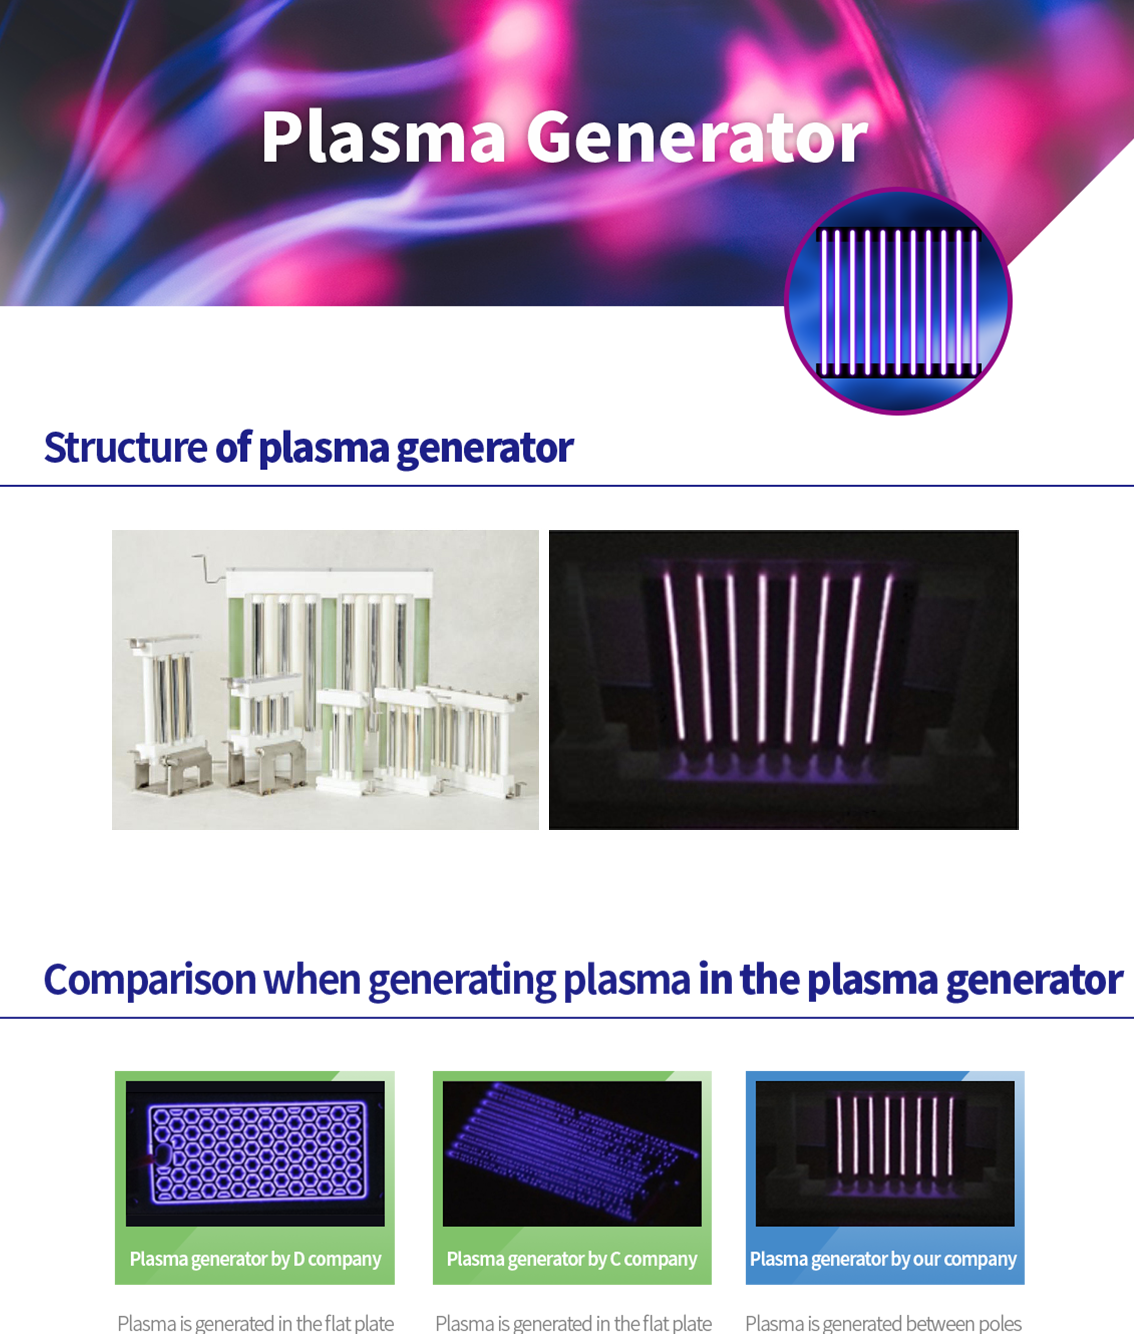 Plasma Technology